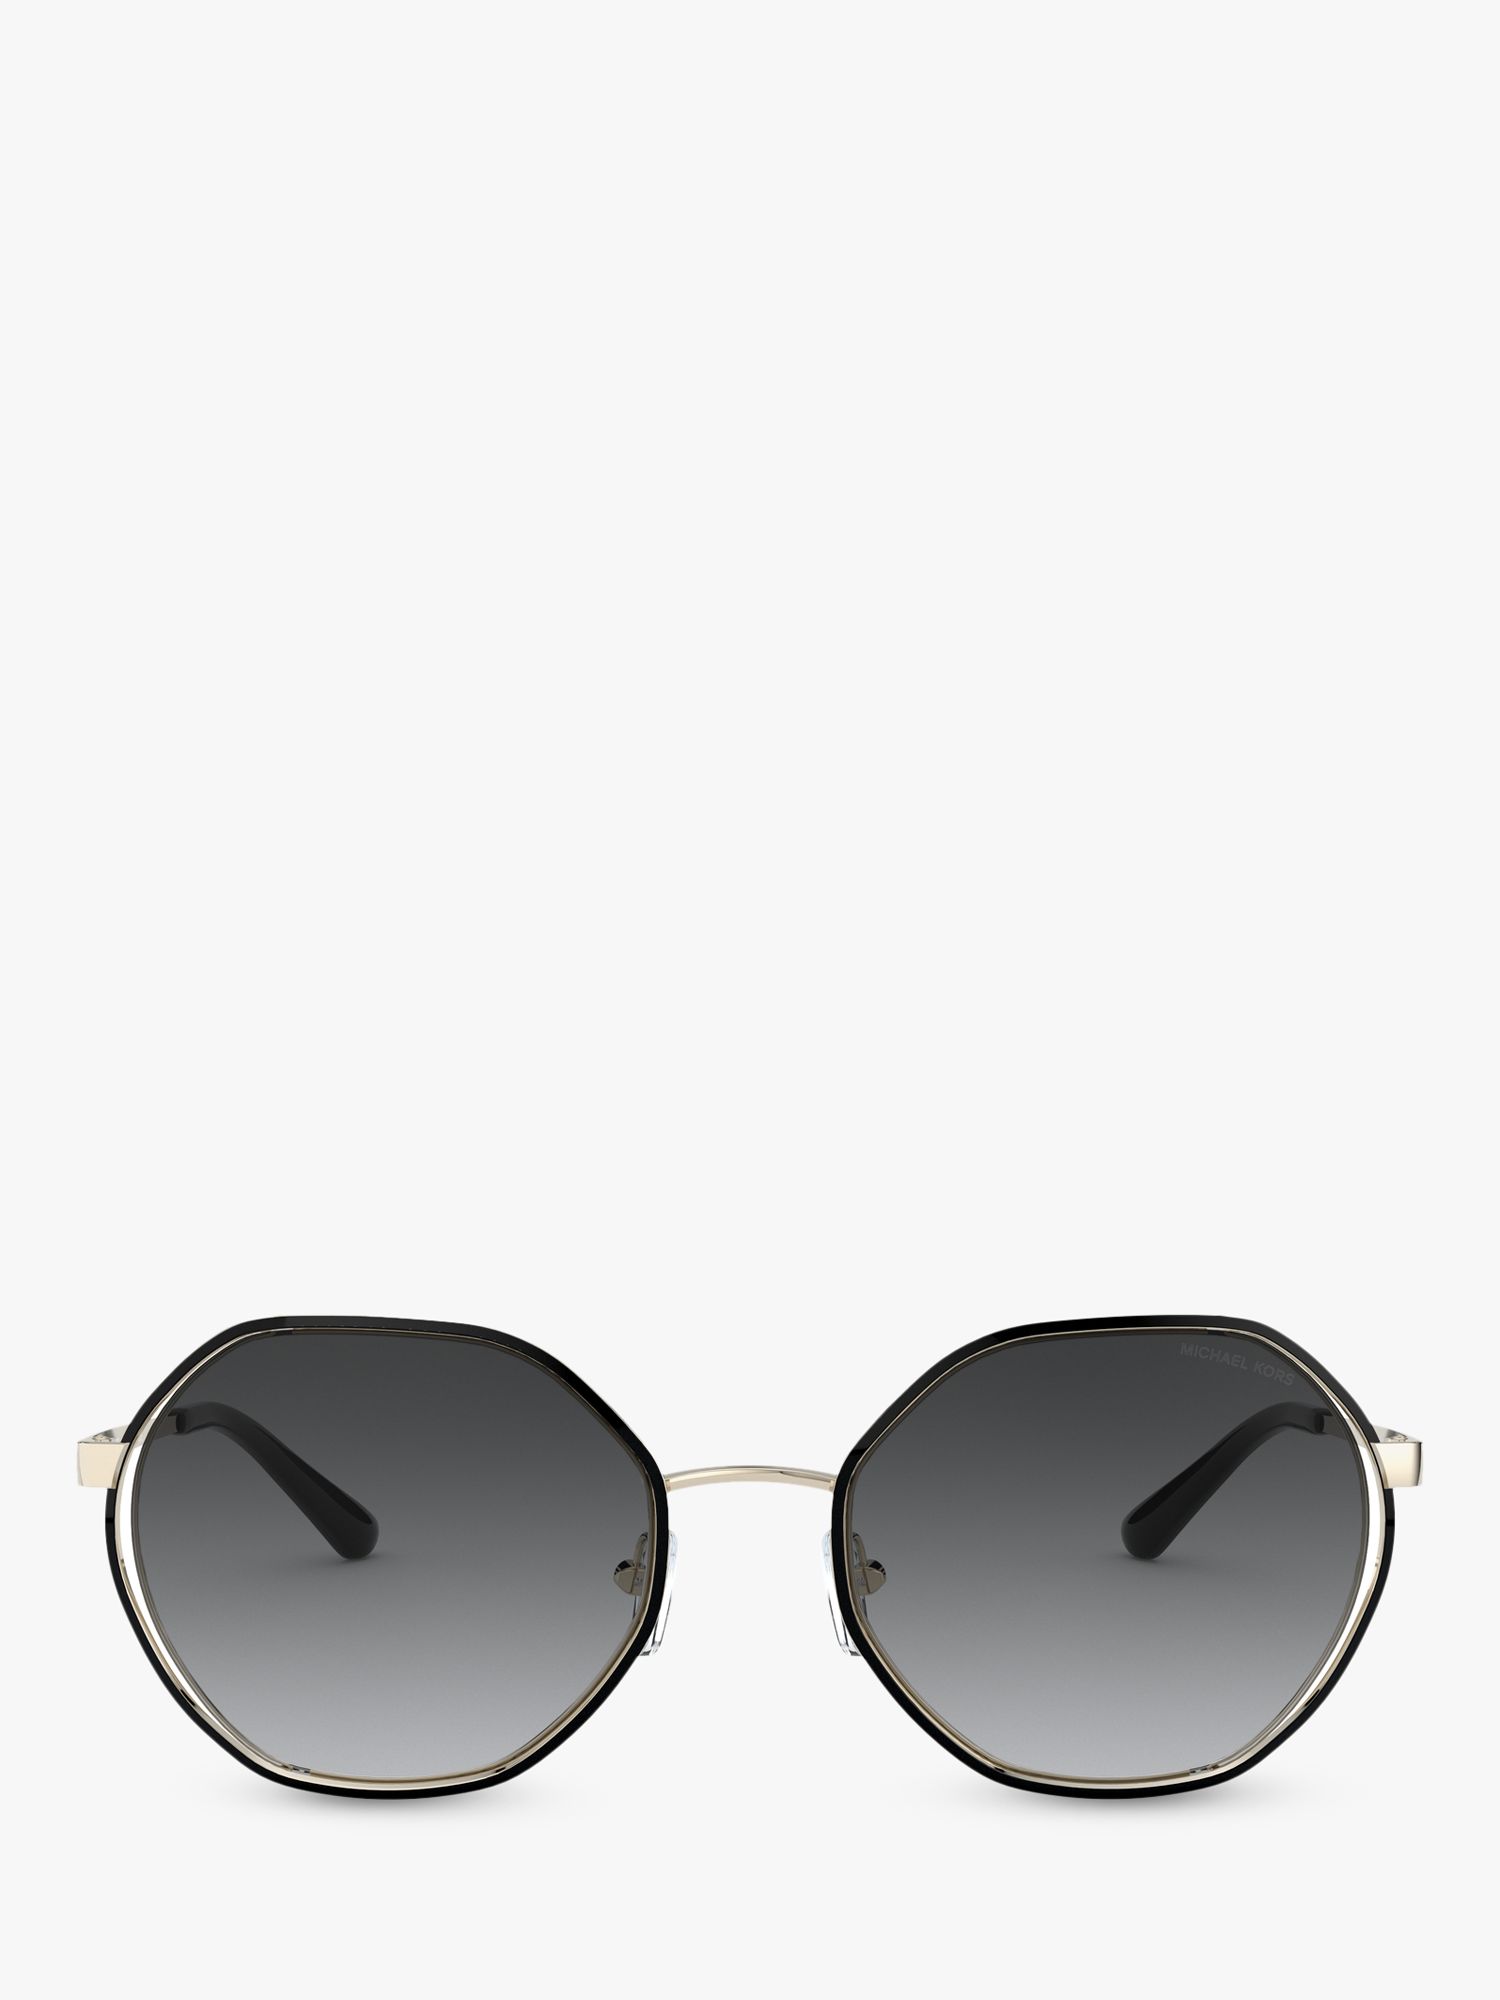 Michael Kors MK1072 Women's Porto Round Sunglasses, Silver/Black ...